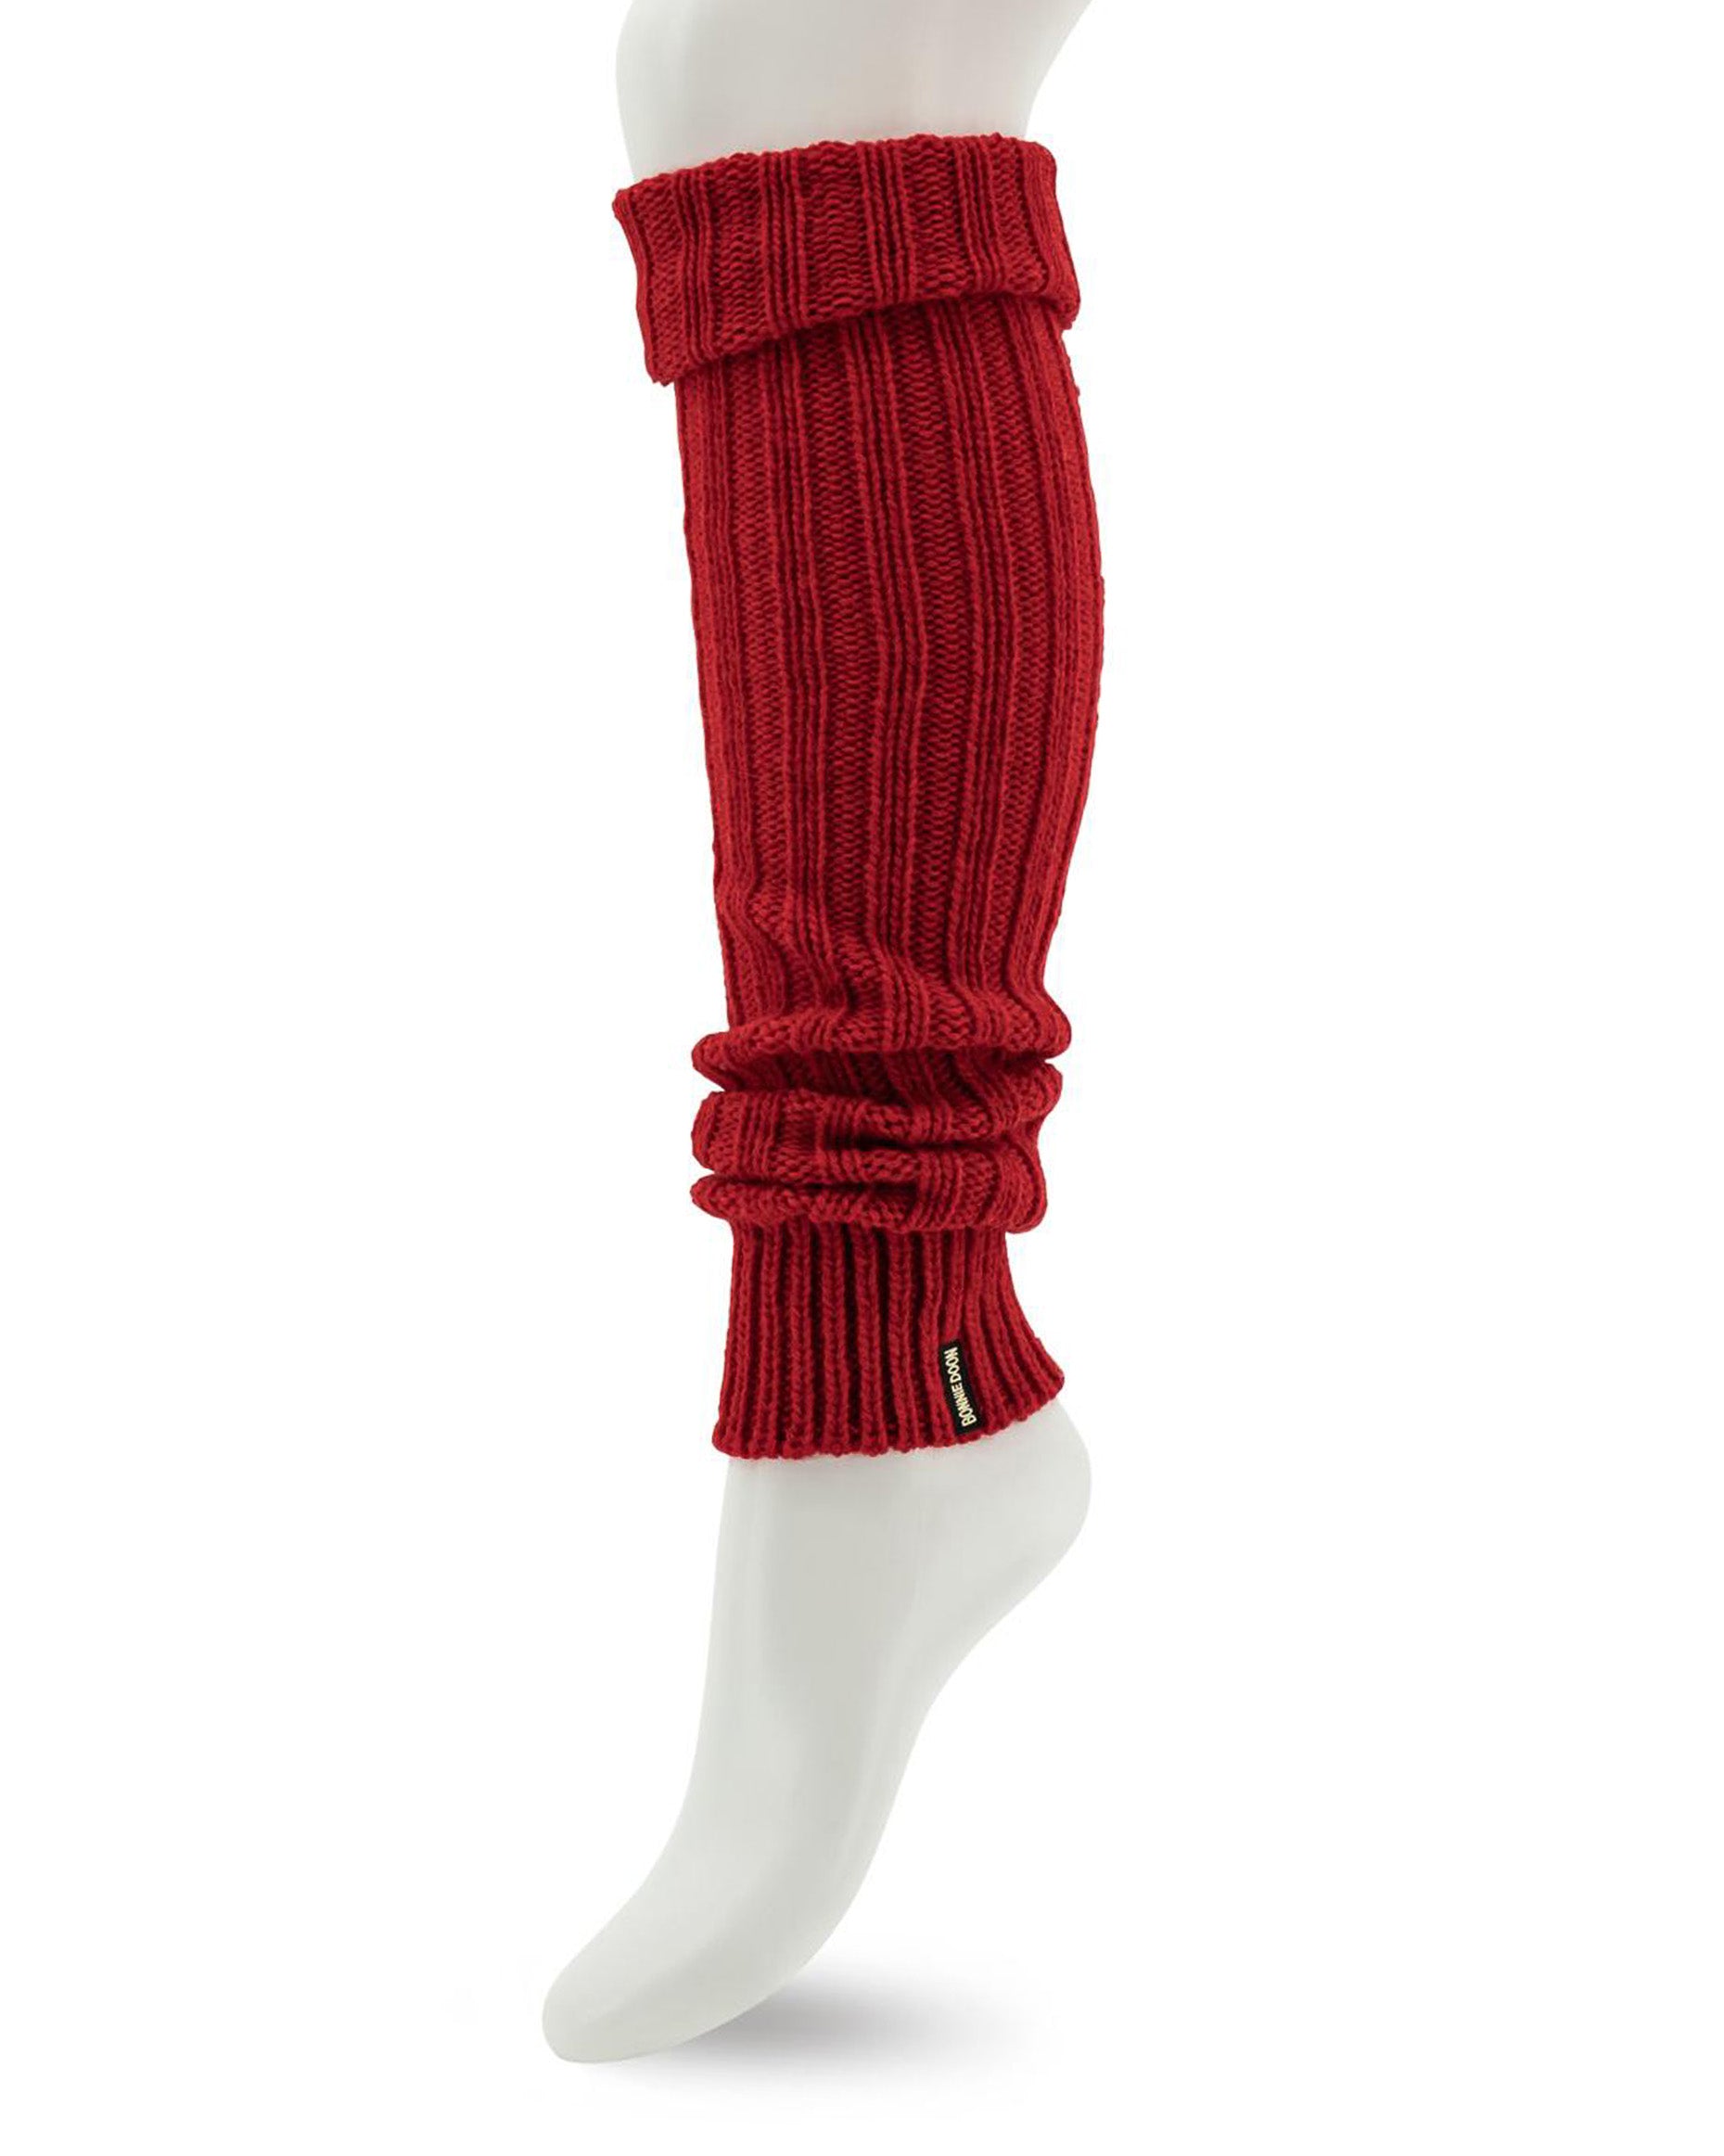 Bonnie Doon Sleever/Legwarmer BE021766 - red wool mix chunky knitted leg warmers